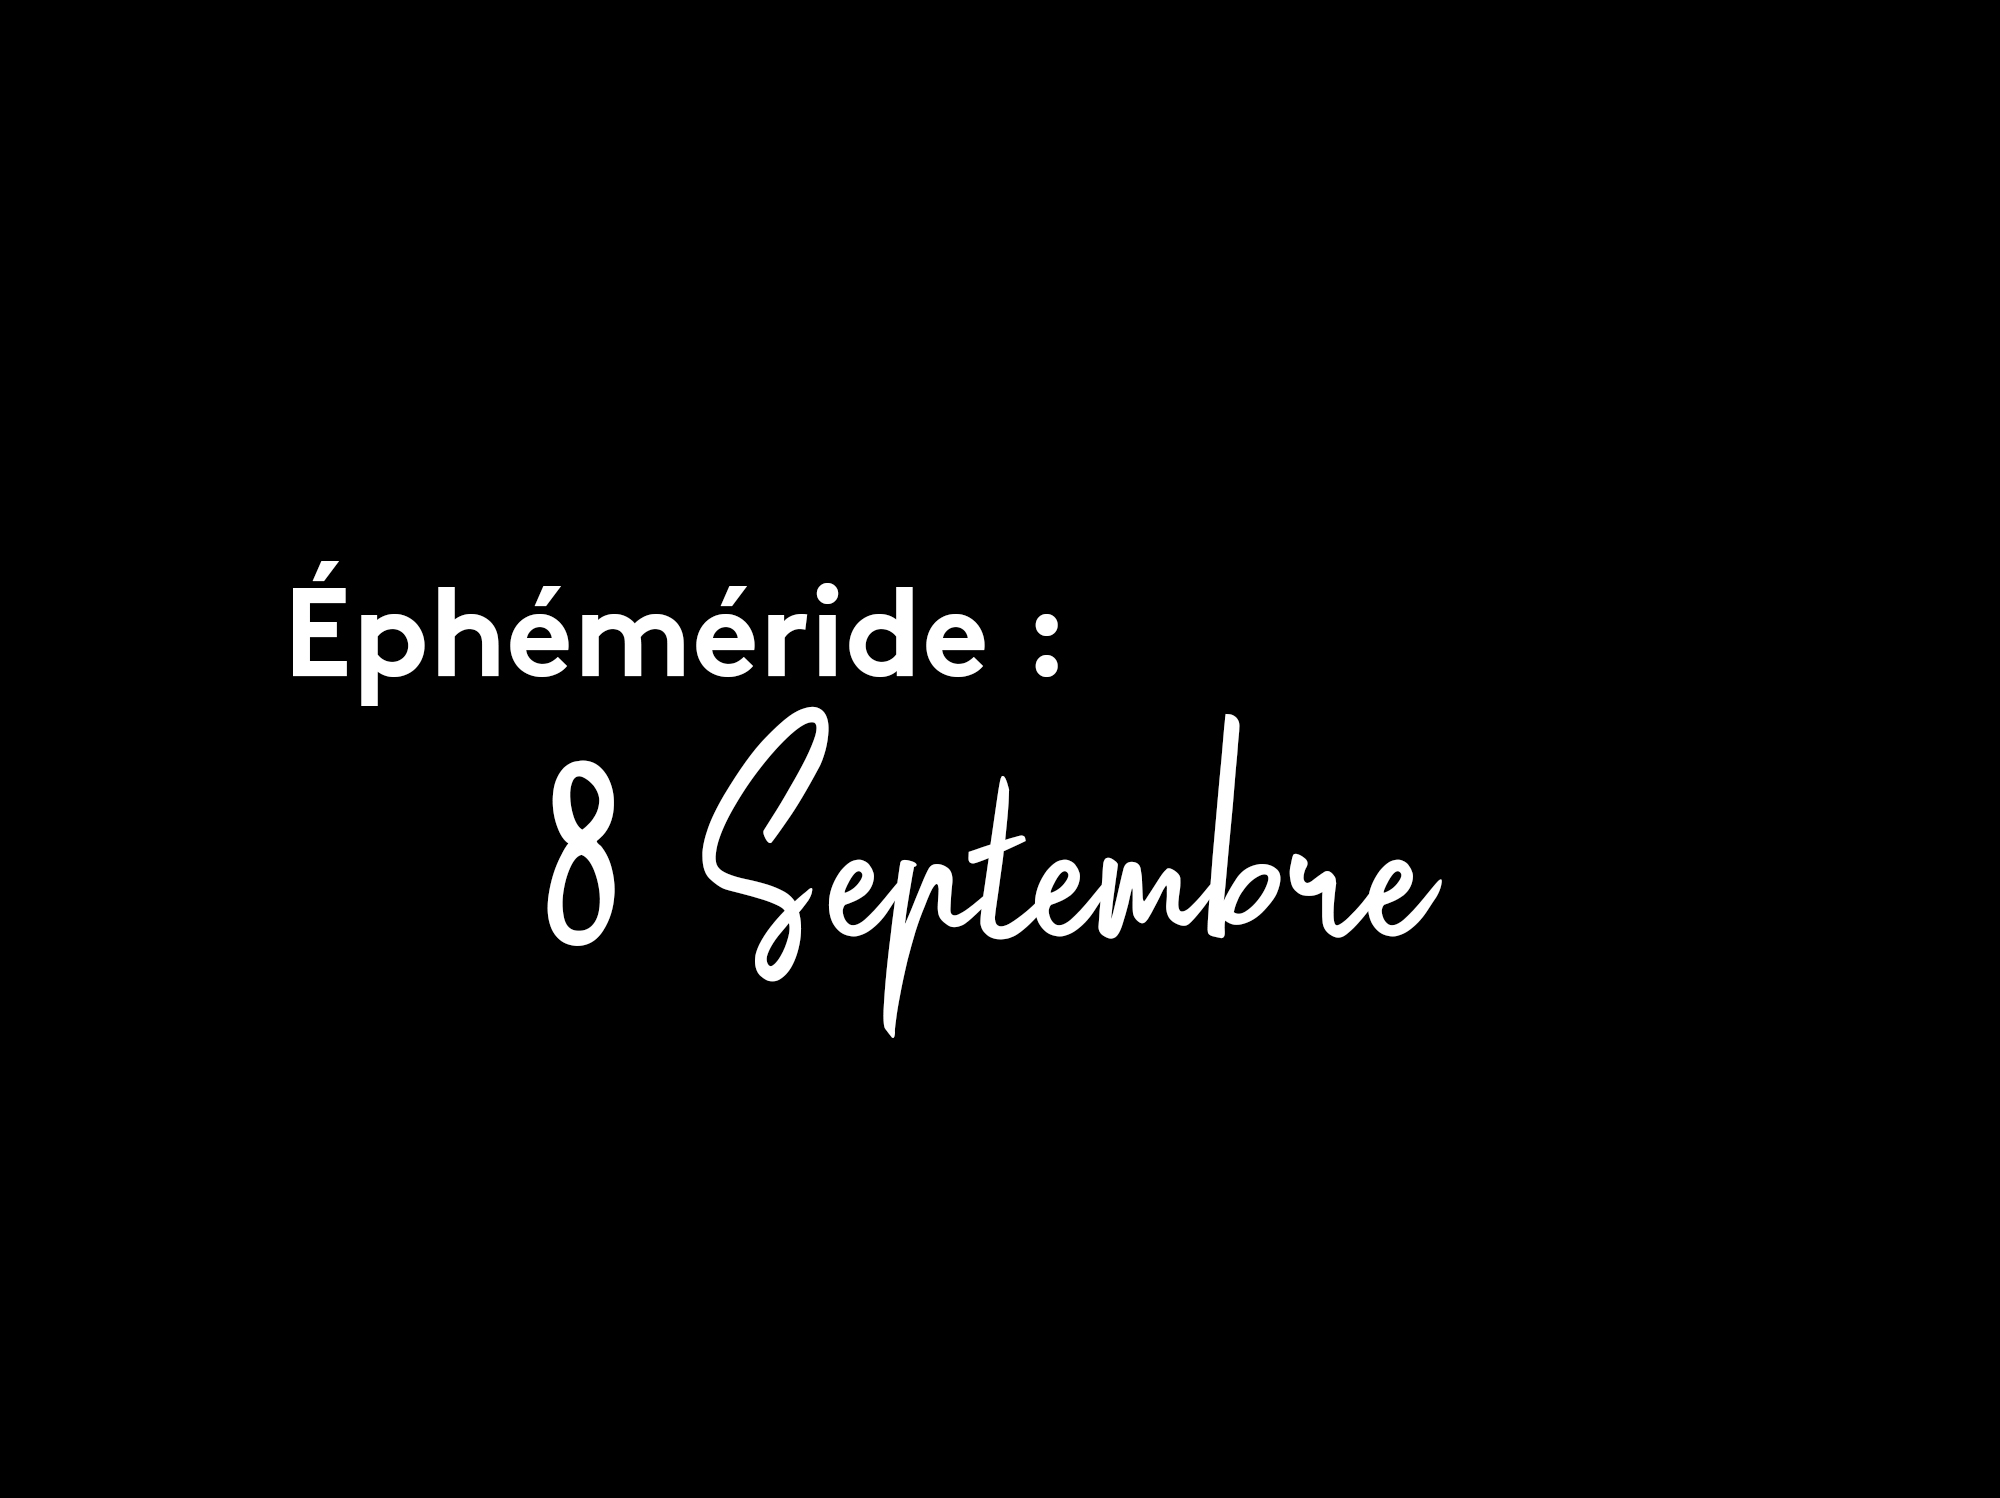 Ephemeride 8 septembre